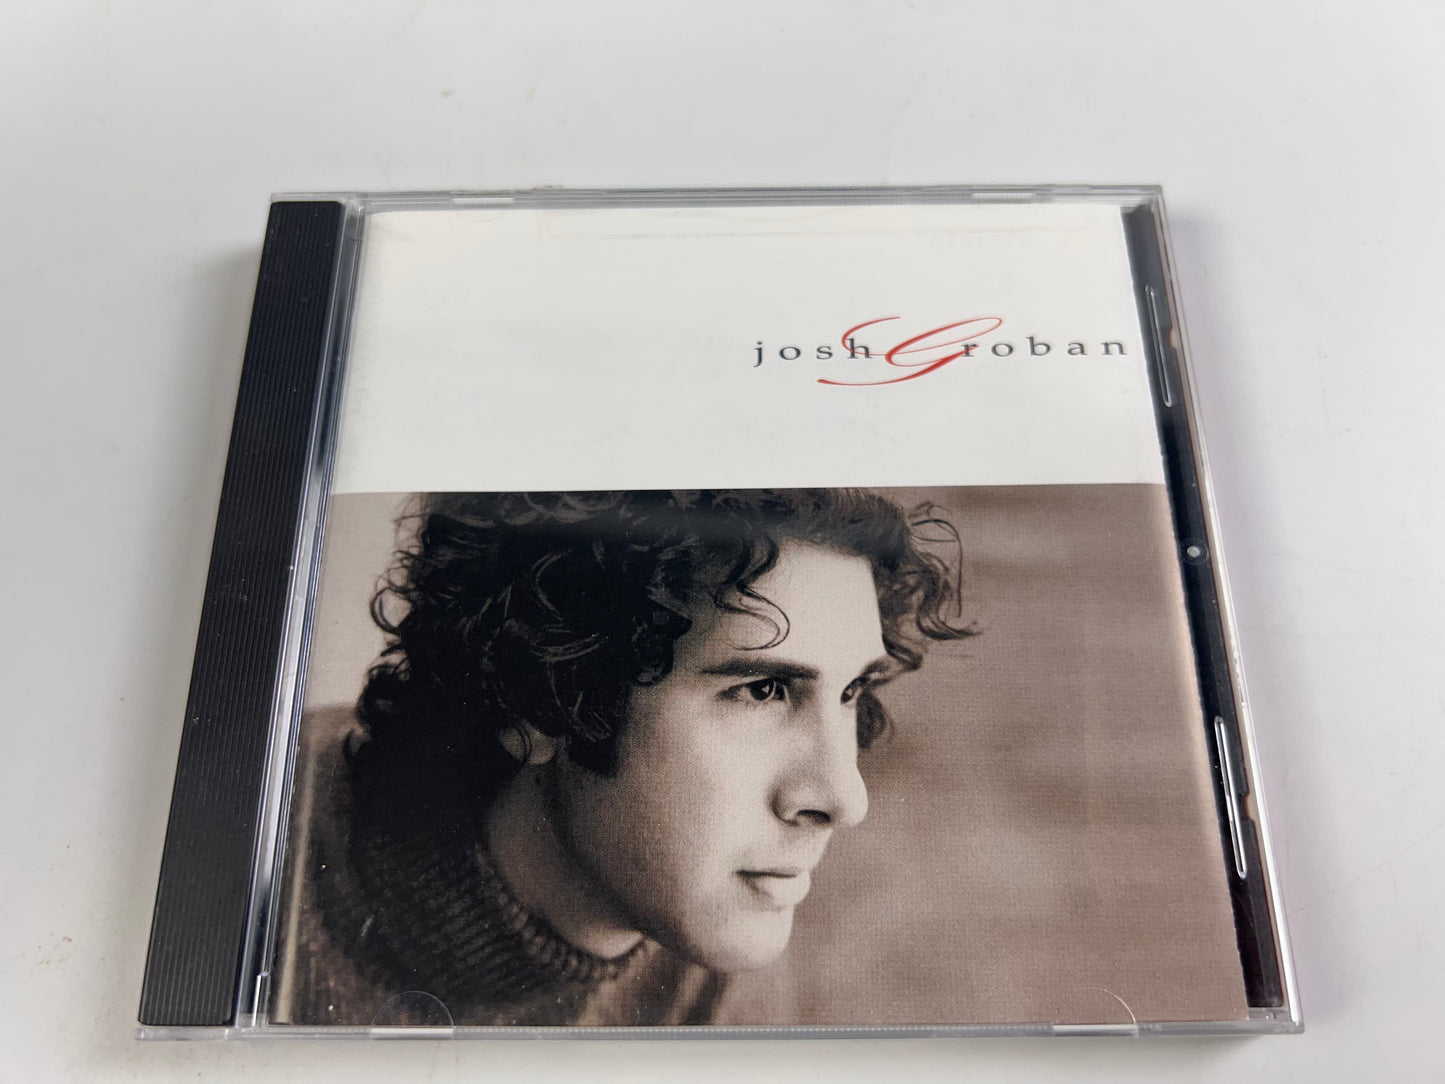 Josh Groban - Audio CD By Josh Groban